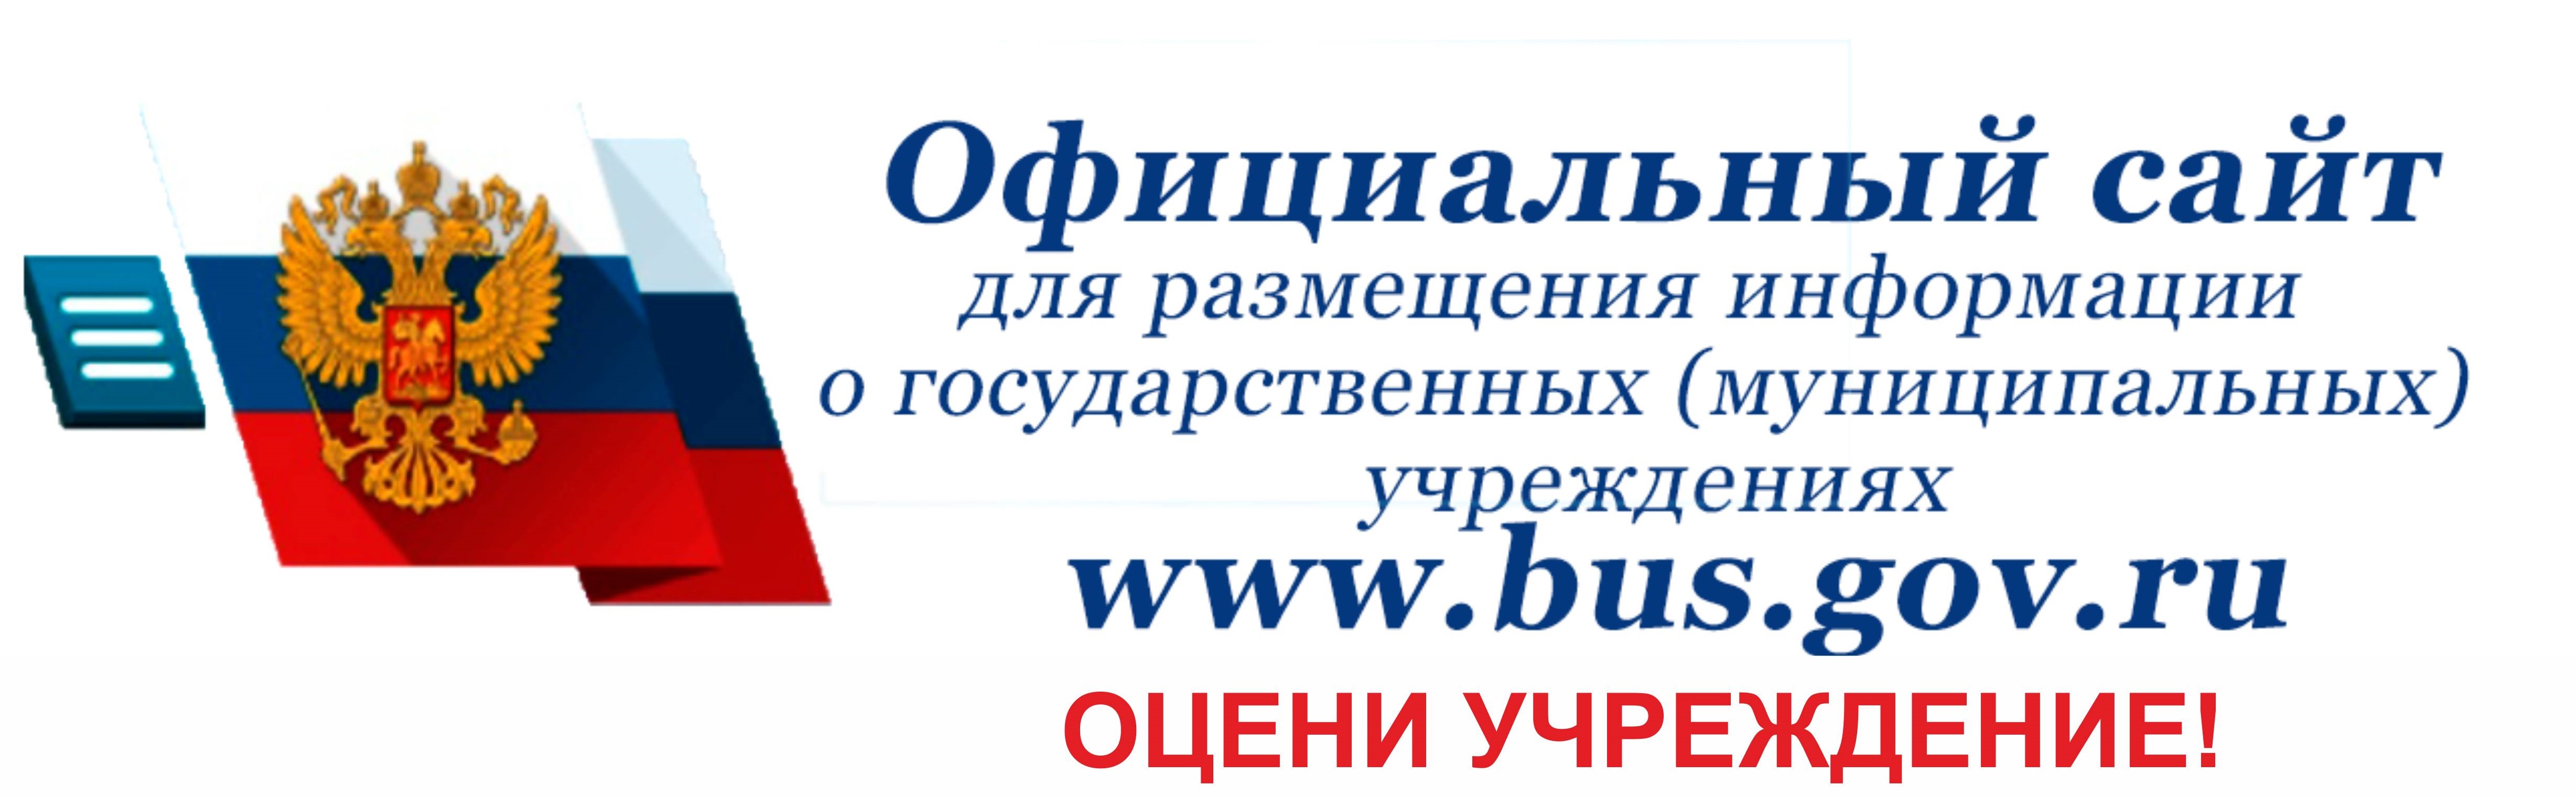 https://bus.gov.ru/info-card/430940